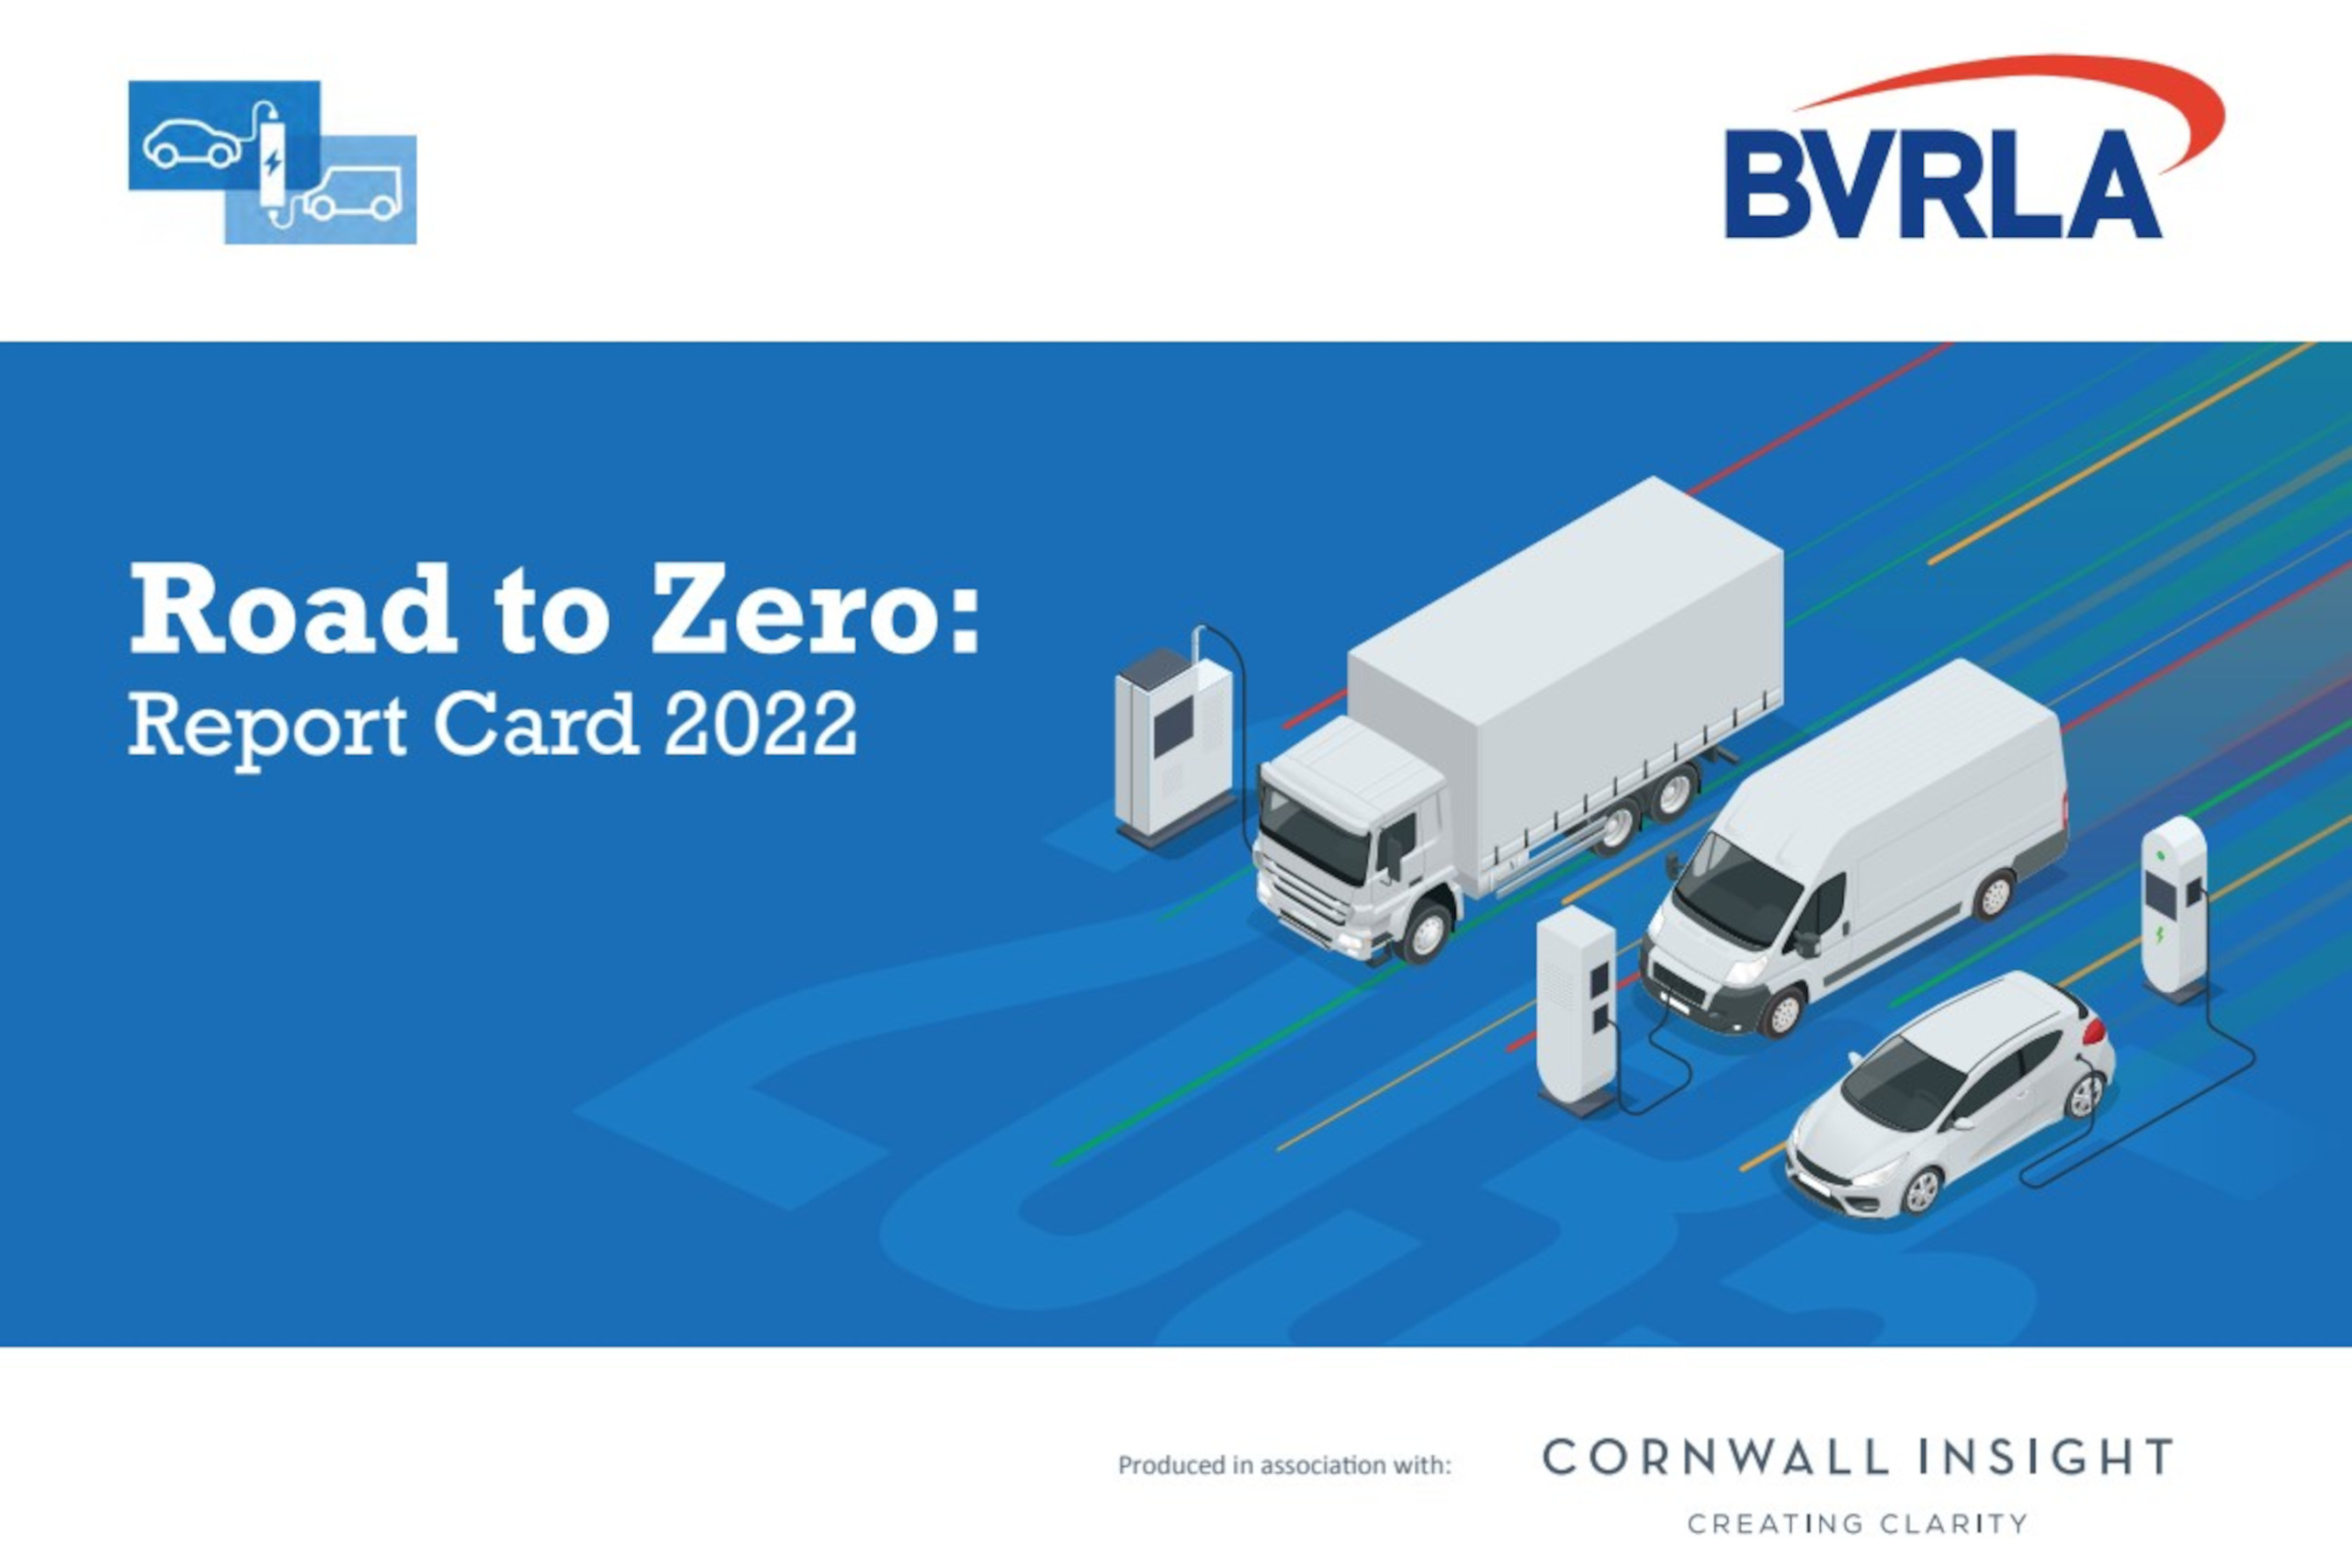 BVRLA Release their latest Road to Zero report